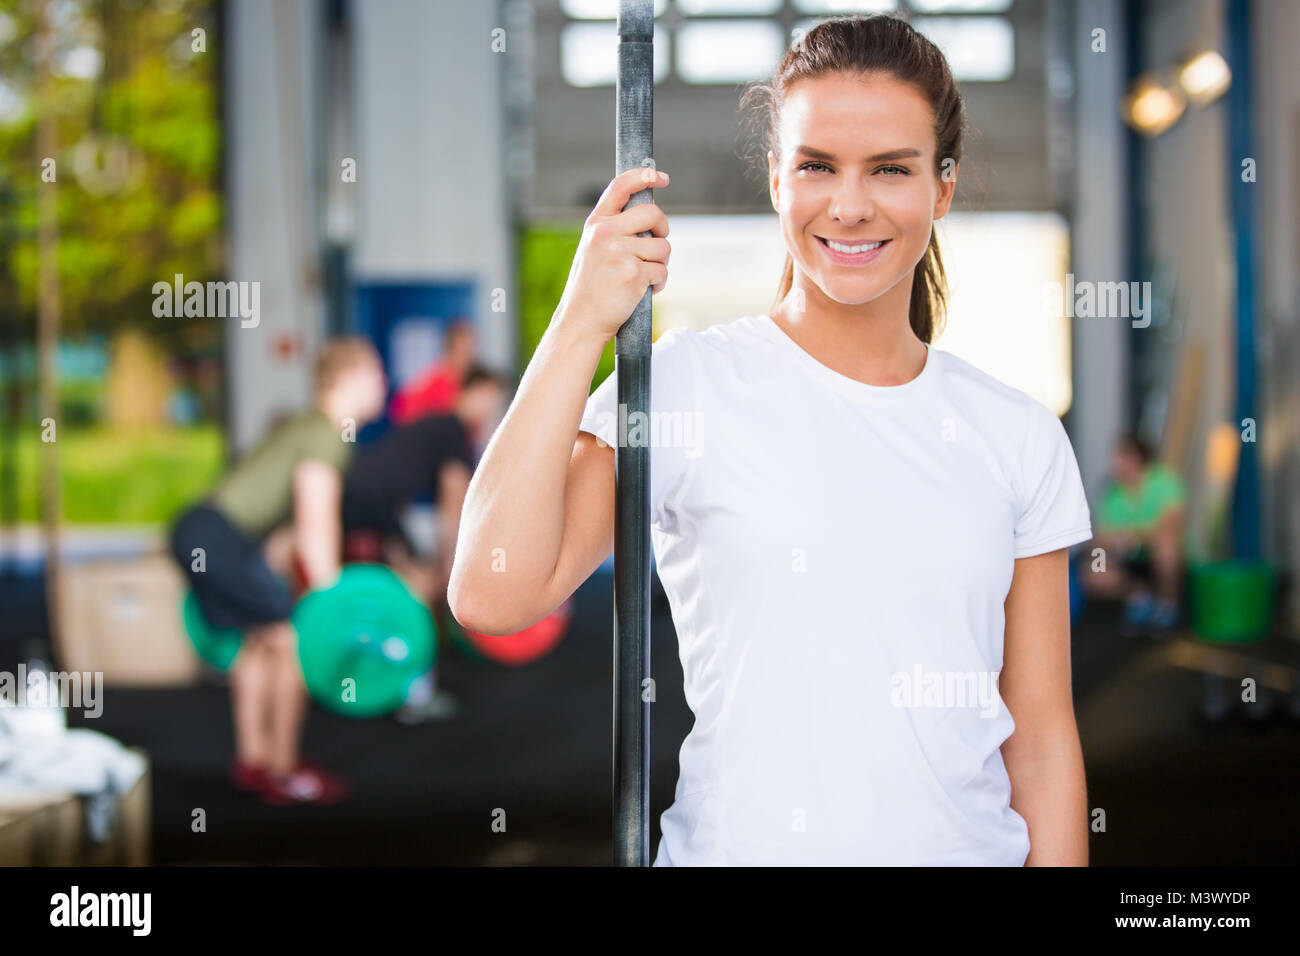 Smiling Female Athlete Wearing White Tshirt In Health Club Stock Photo